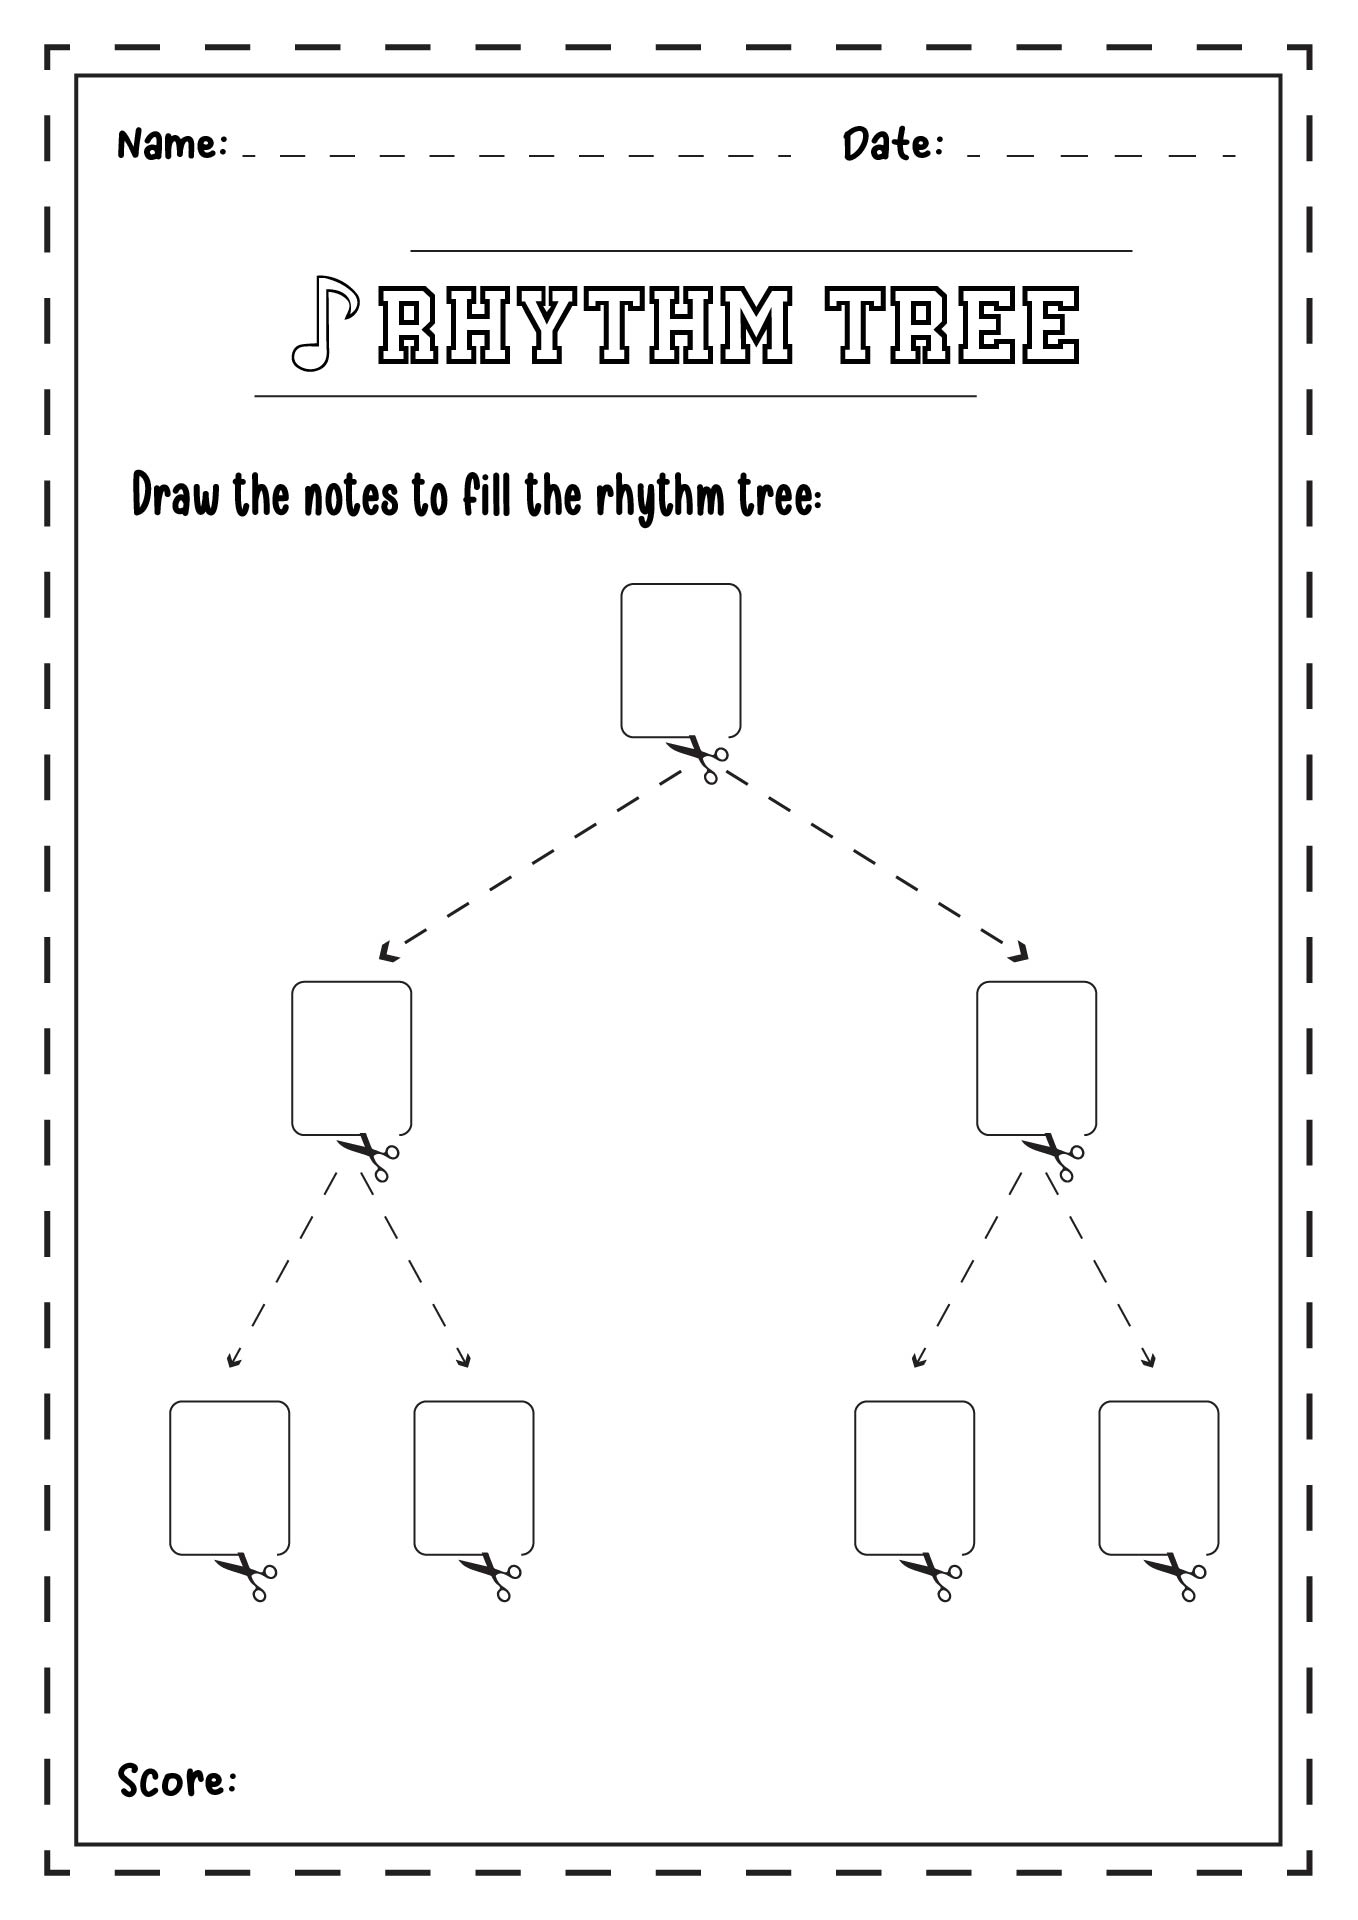 Rhythm Tree Worksheet Image